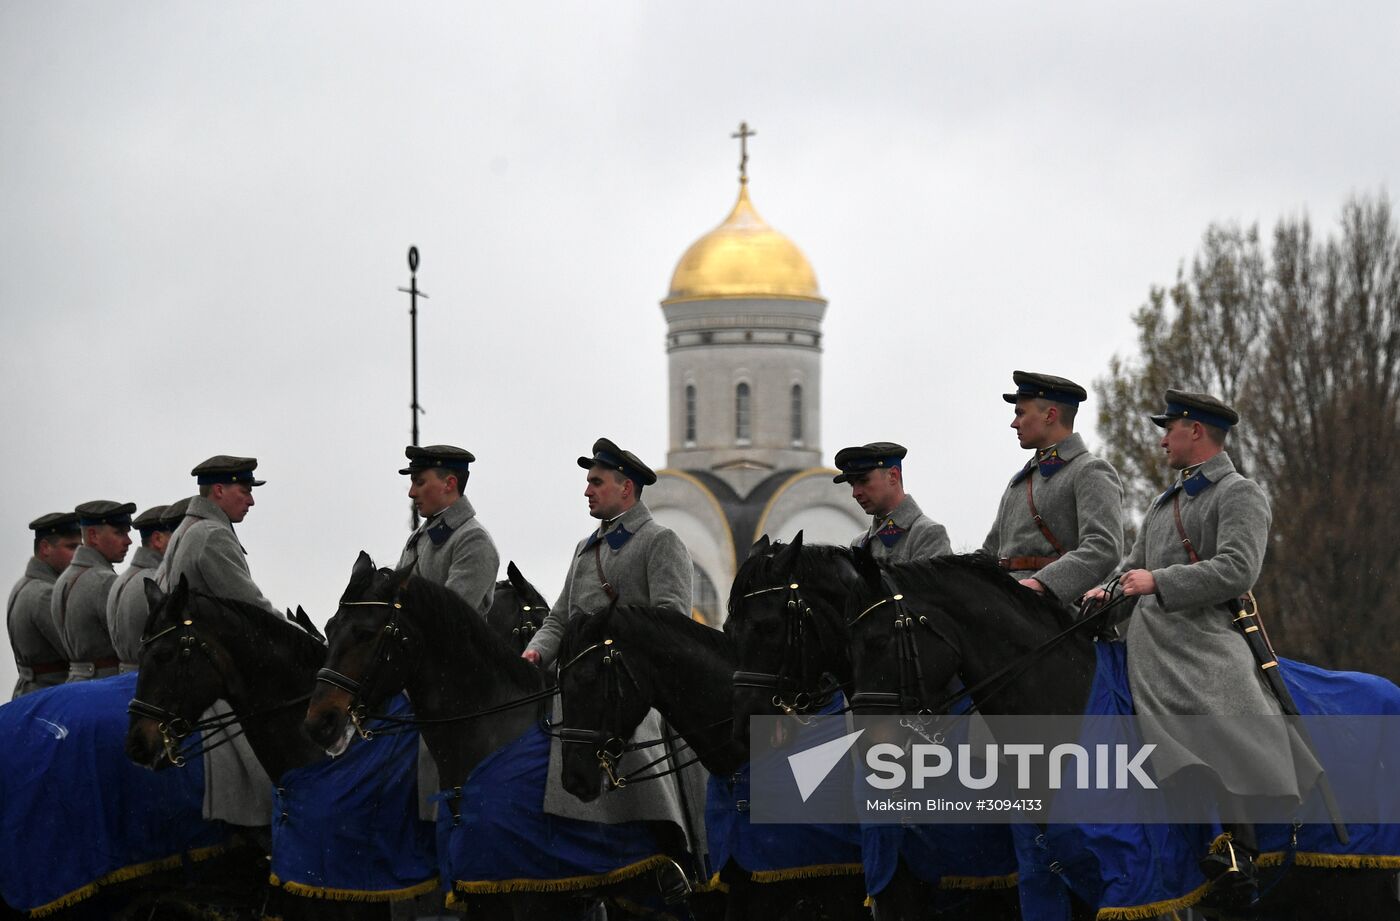 Russian Traditions cavalry show at Poklonnaya Hill